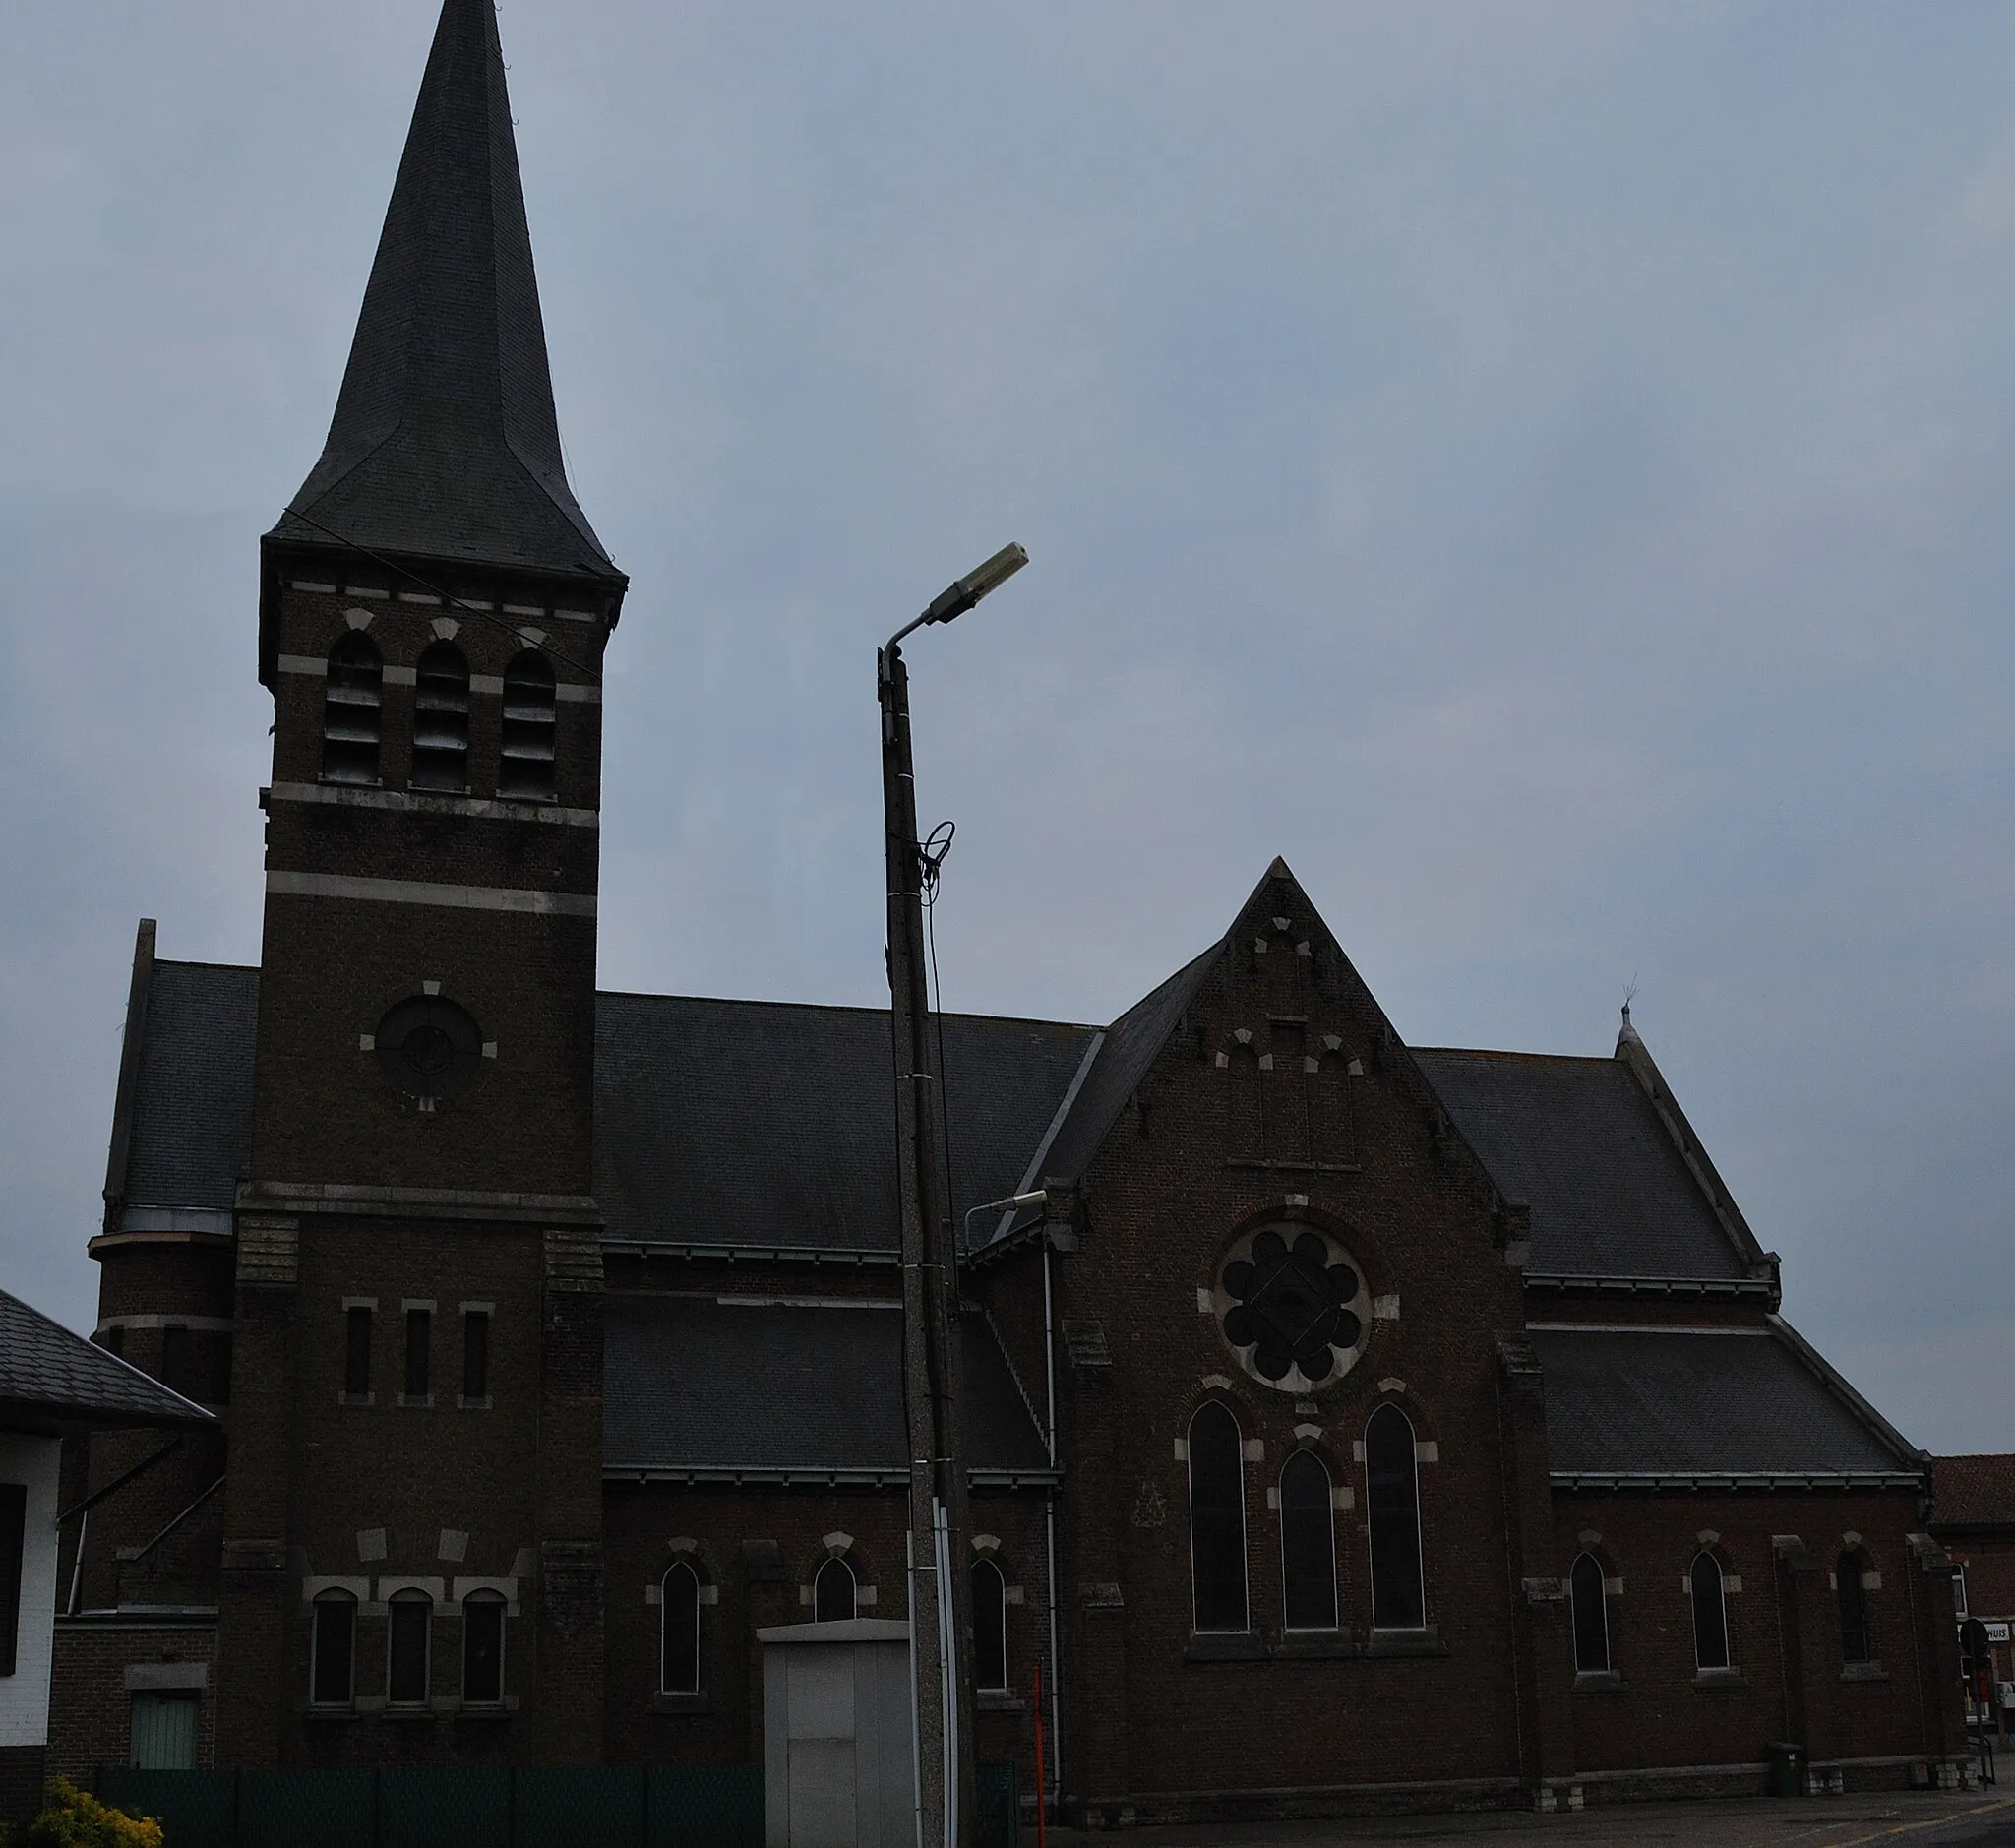 Photo showing: Church of Saint Nicholas (North face) at the village of Glabbeek, province of Flemish Brabant, Belgium. Nikon D60 f=18mm f/6.3 at 1/160s ISO 200. Processed using Nikon ViewNX 1.5.2 and Gimp 2.6.6.